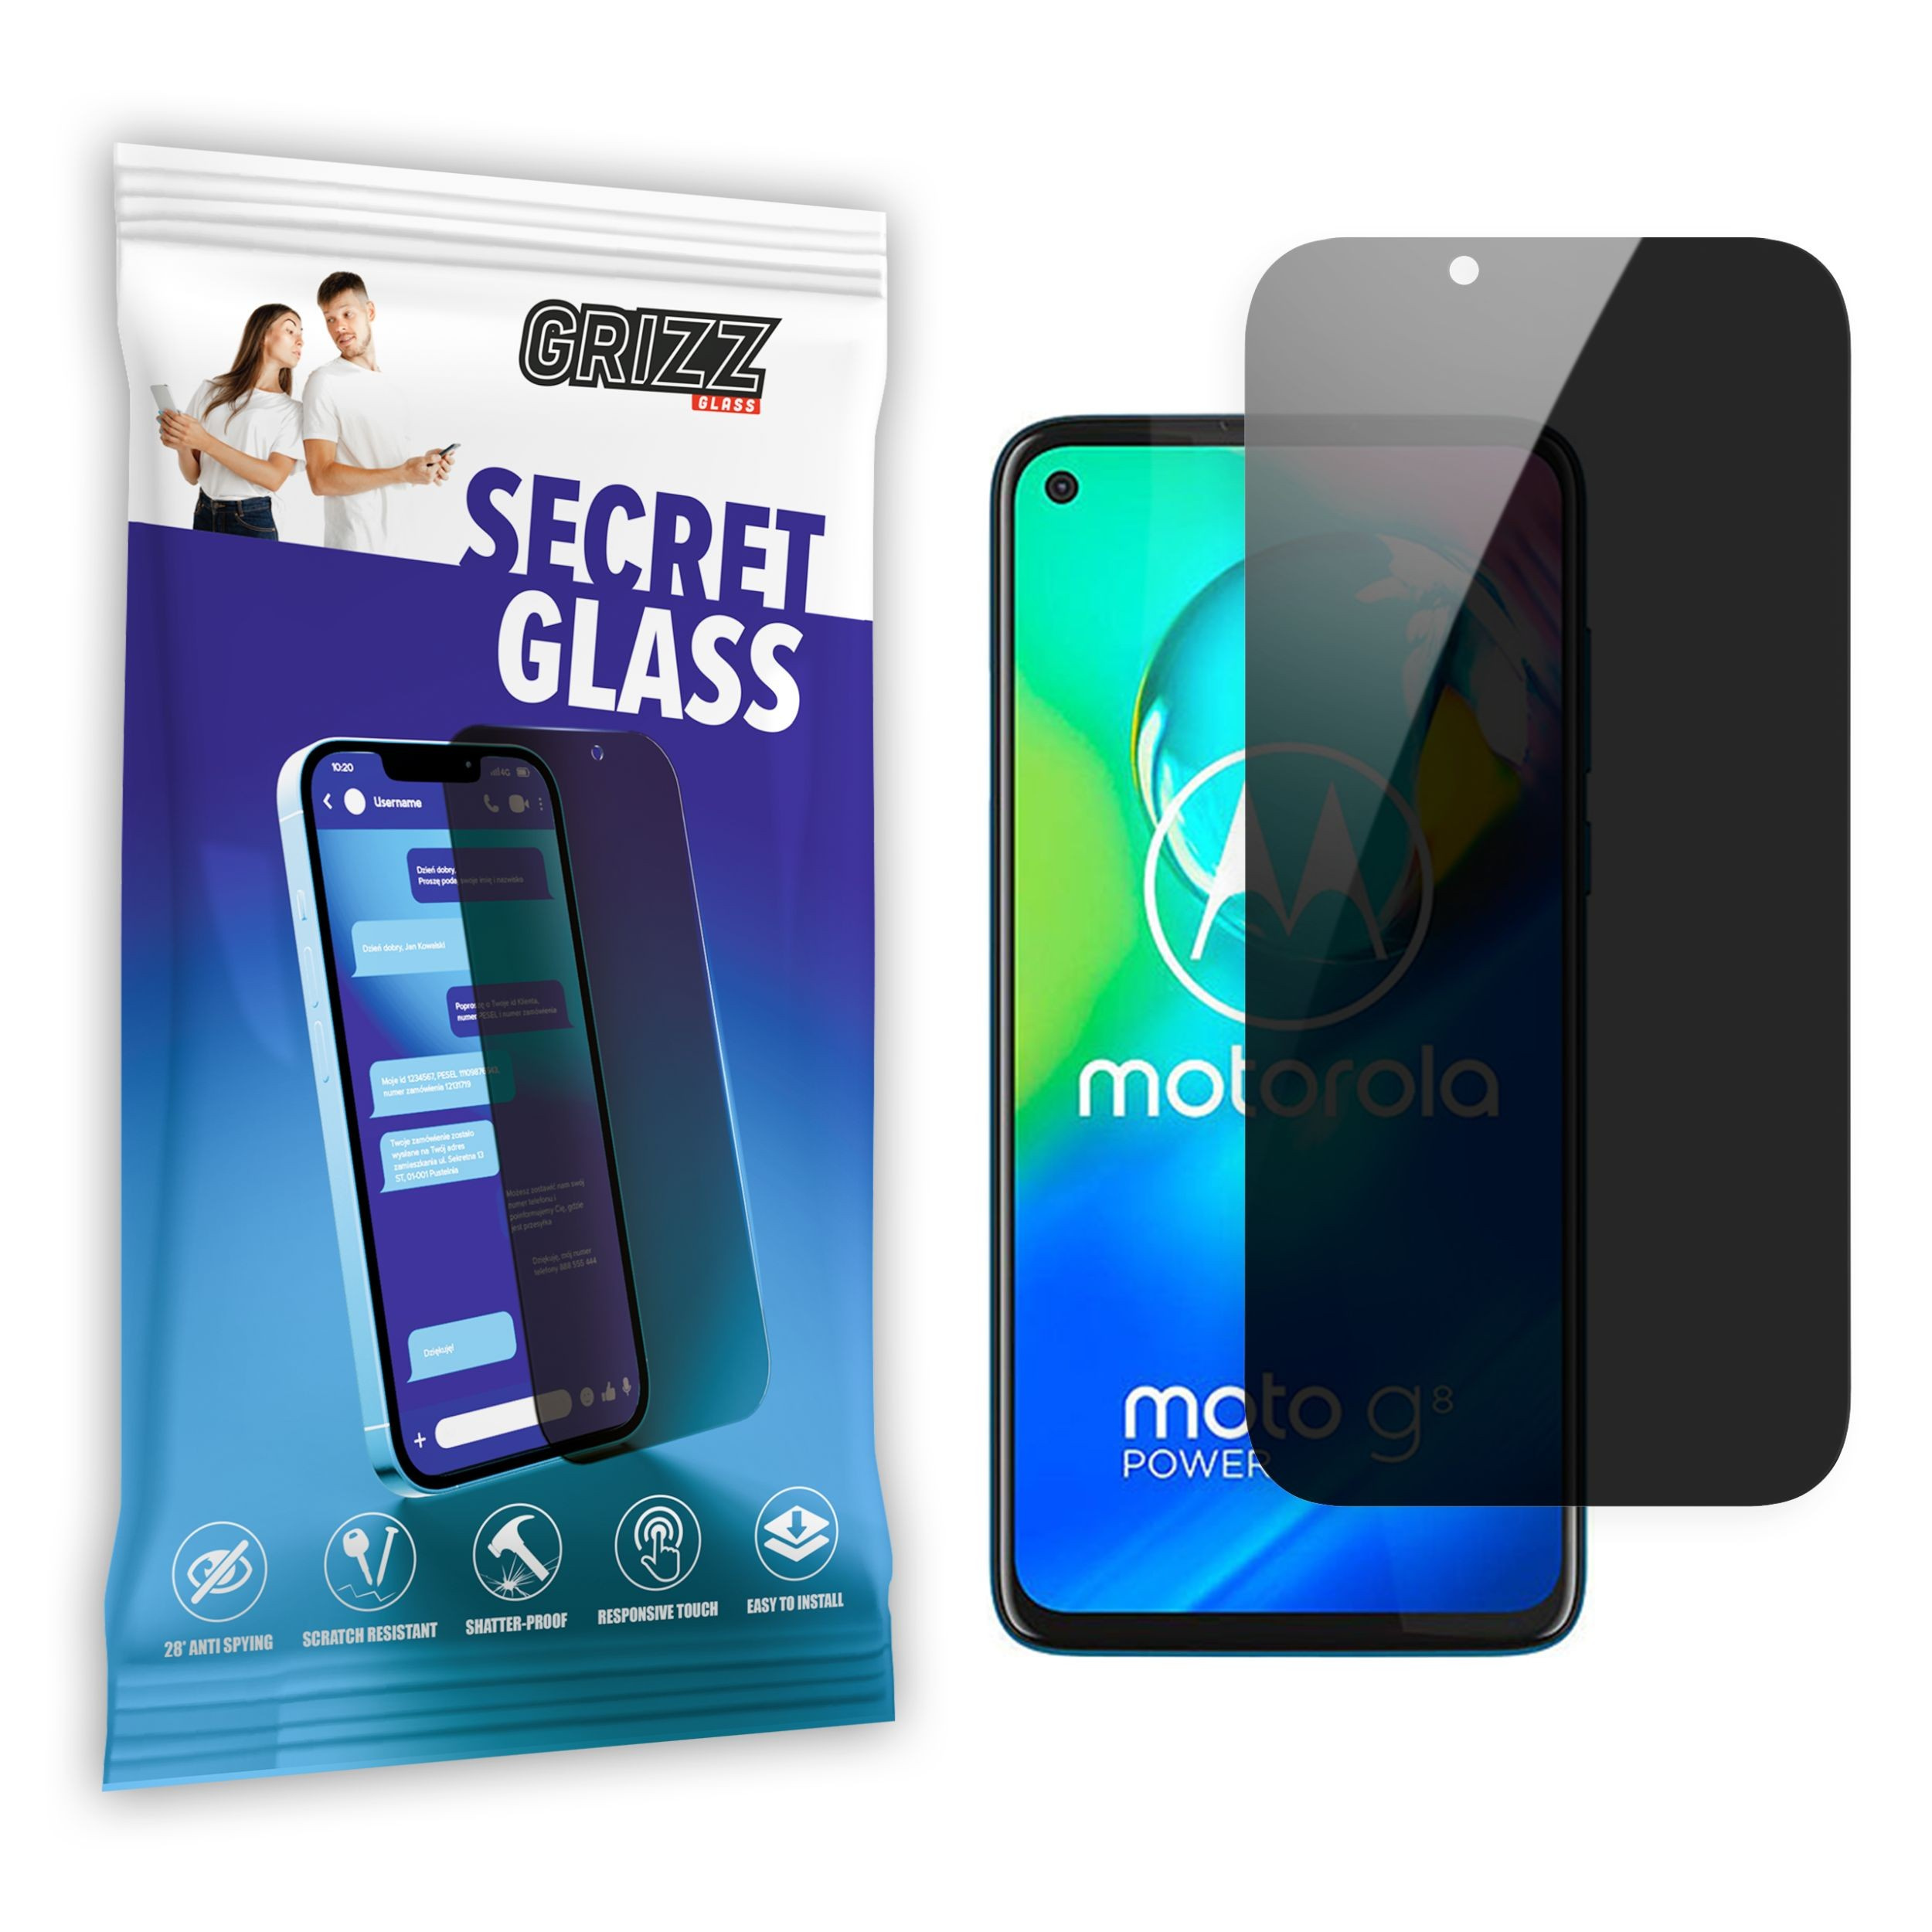 GrizzGlass SecretGlass Motorola Moto G8 Power